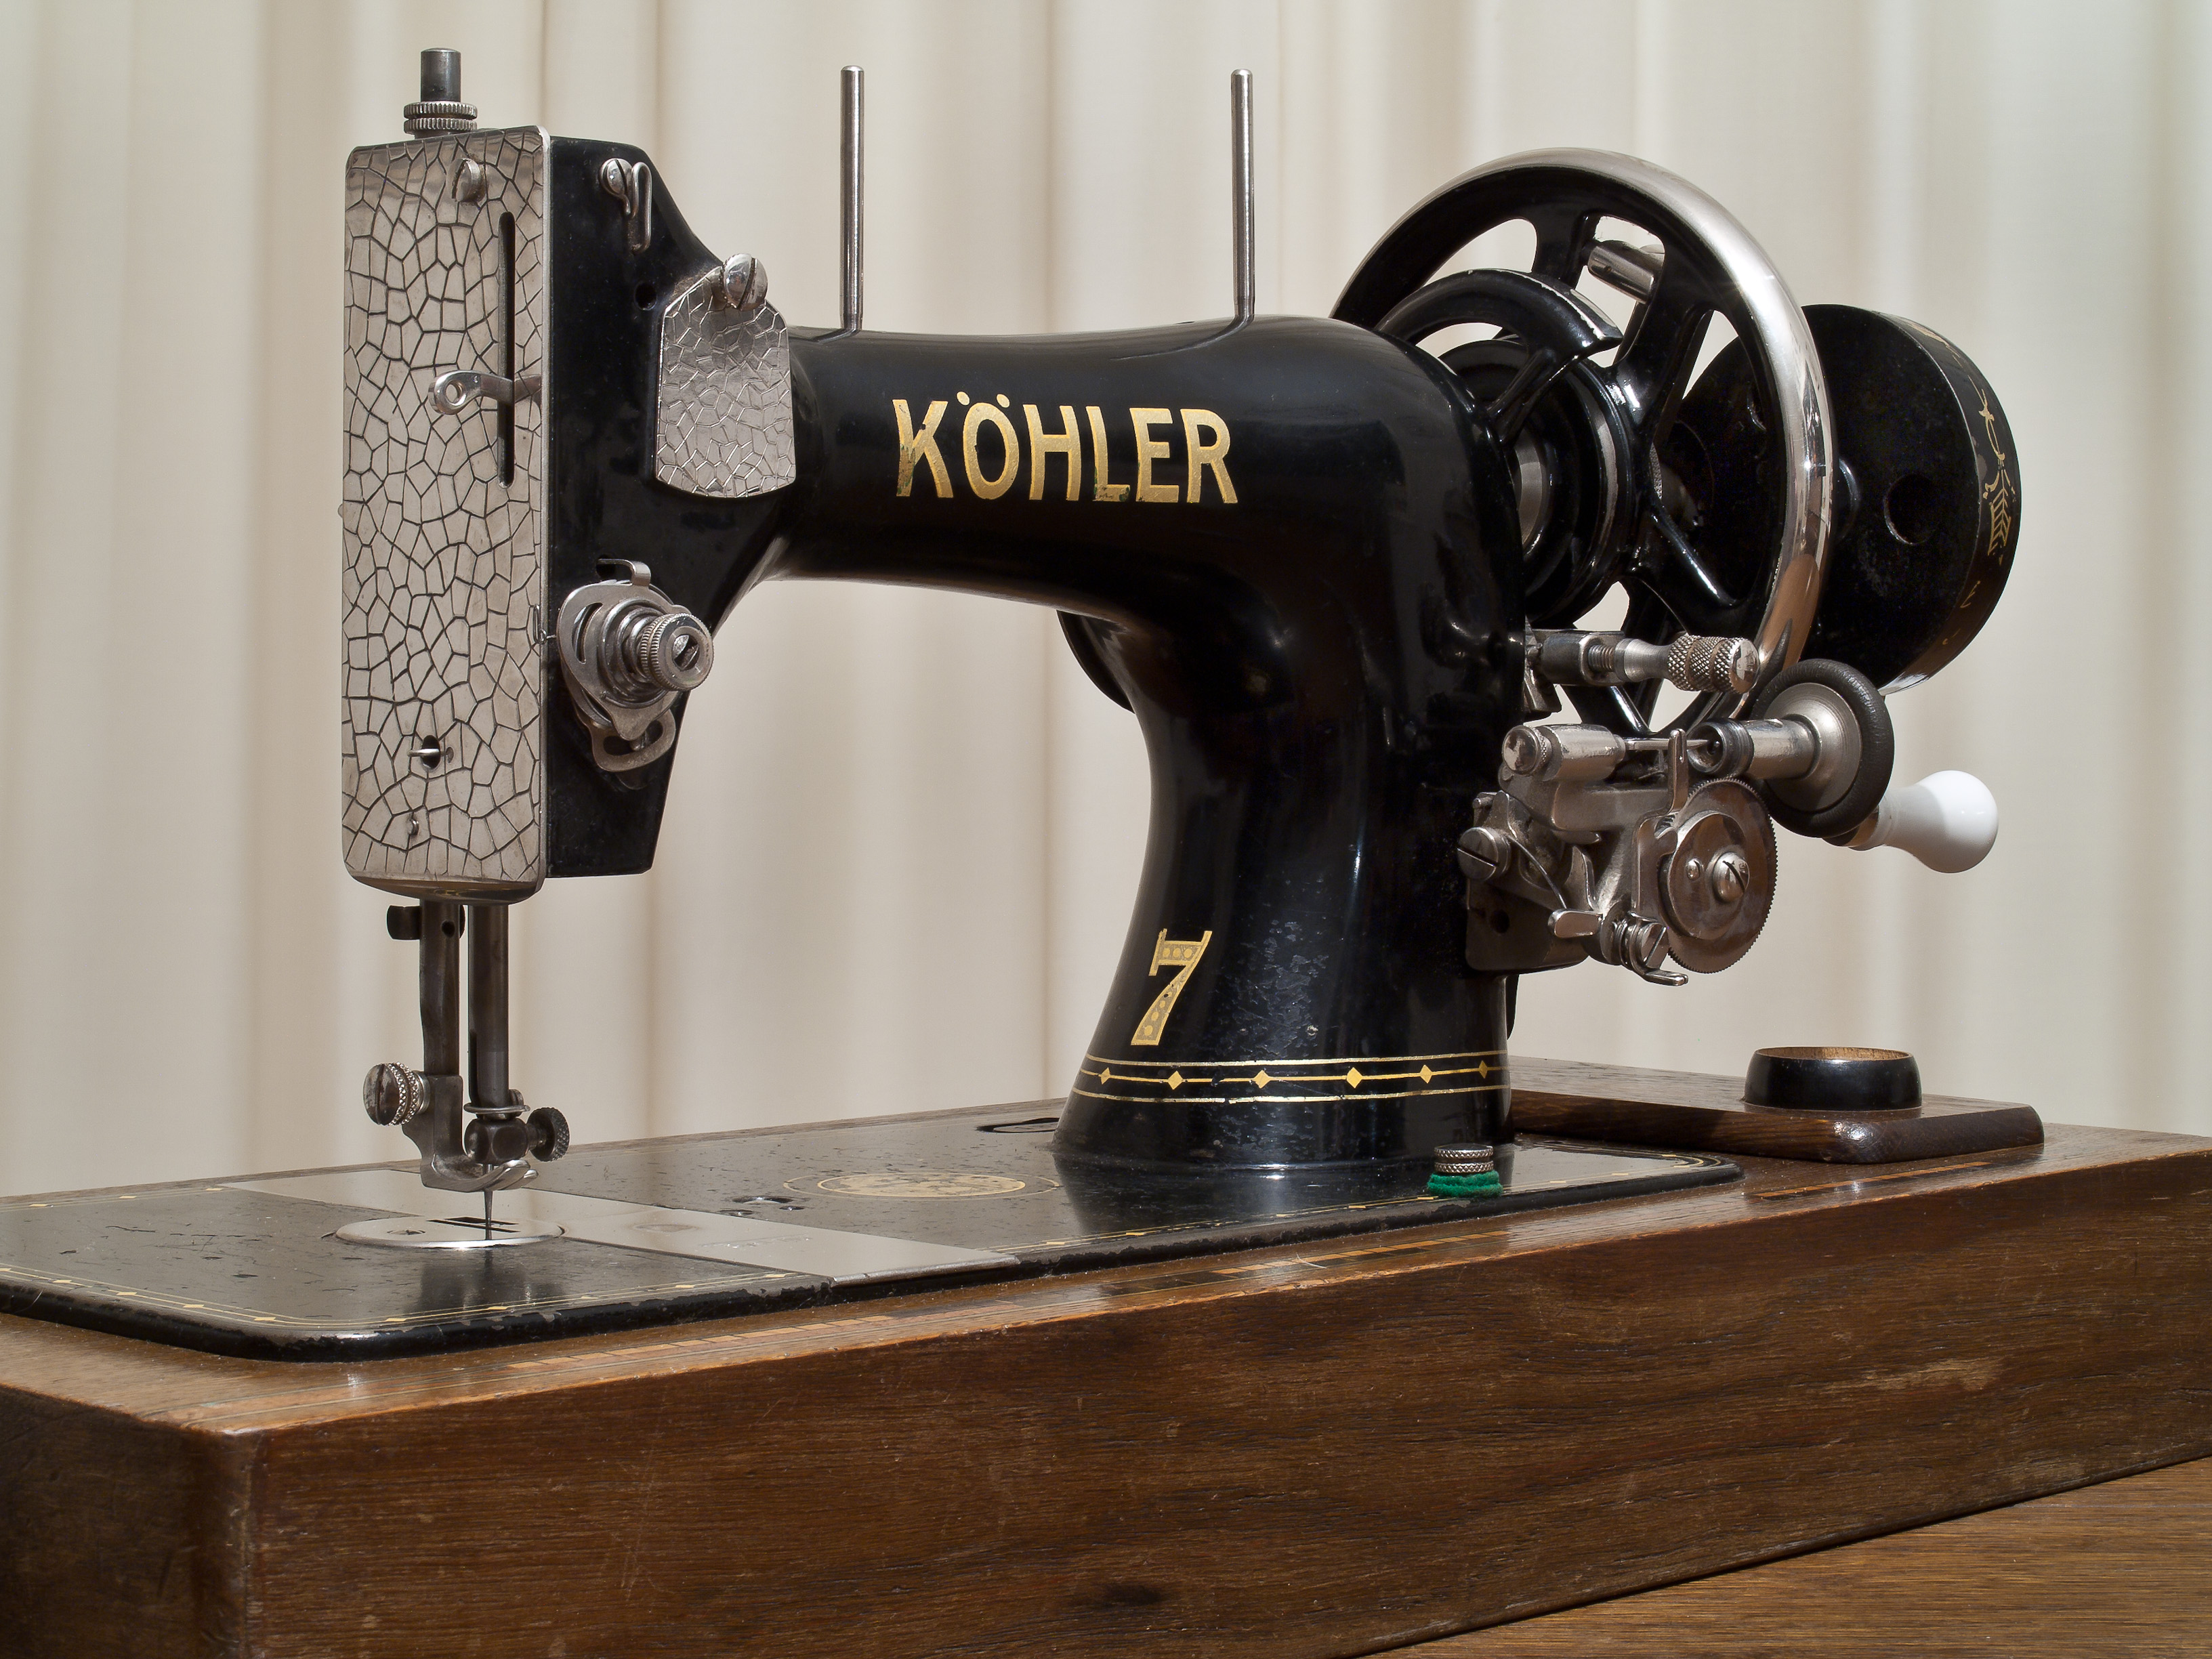 Vintage Köhler sewing machine